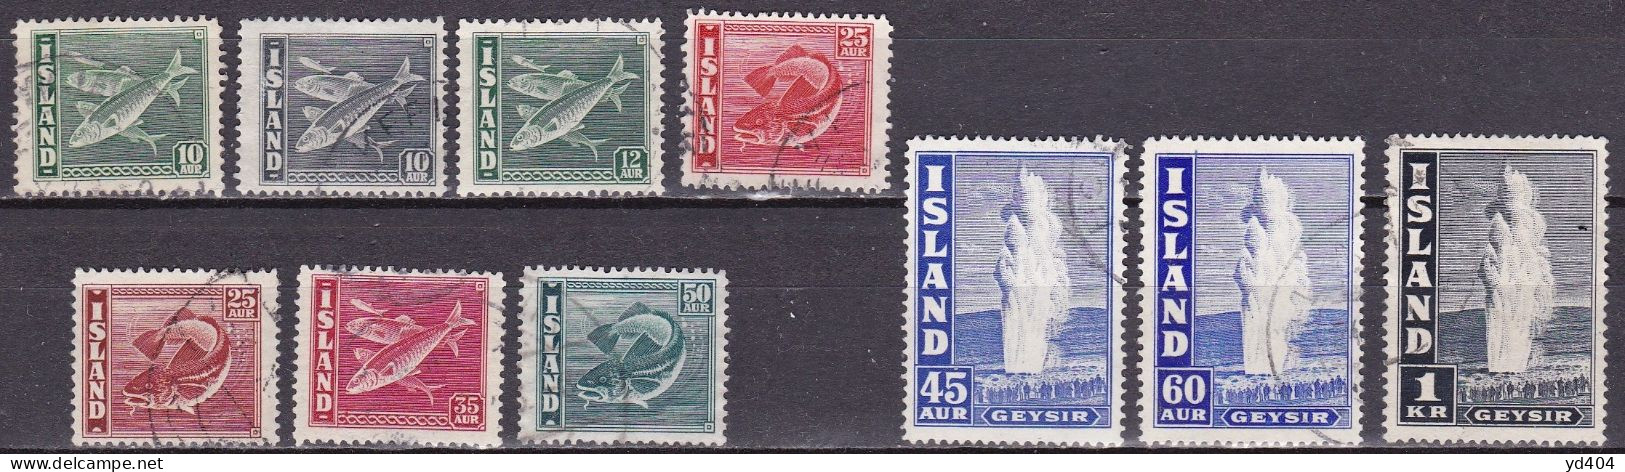 IS042 – ISLANDE – ICELAND – 1940-45 – FISHES & GEYSER – Y&T # 189/198a USED - Gebruikt